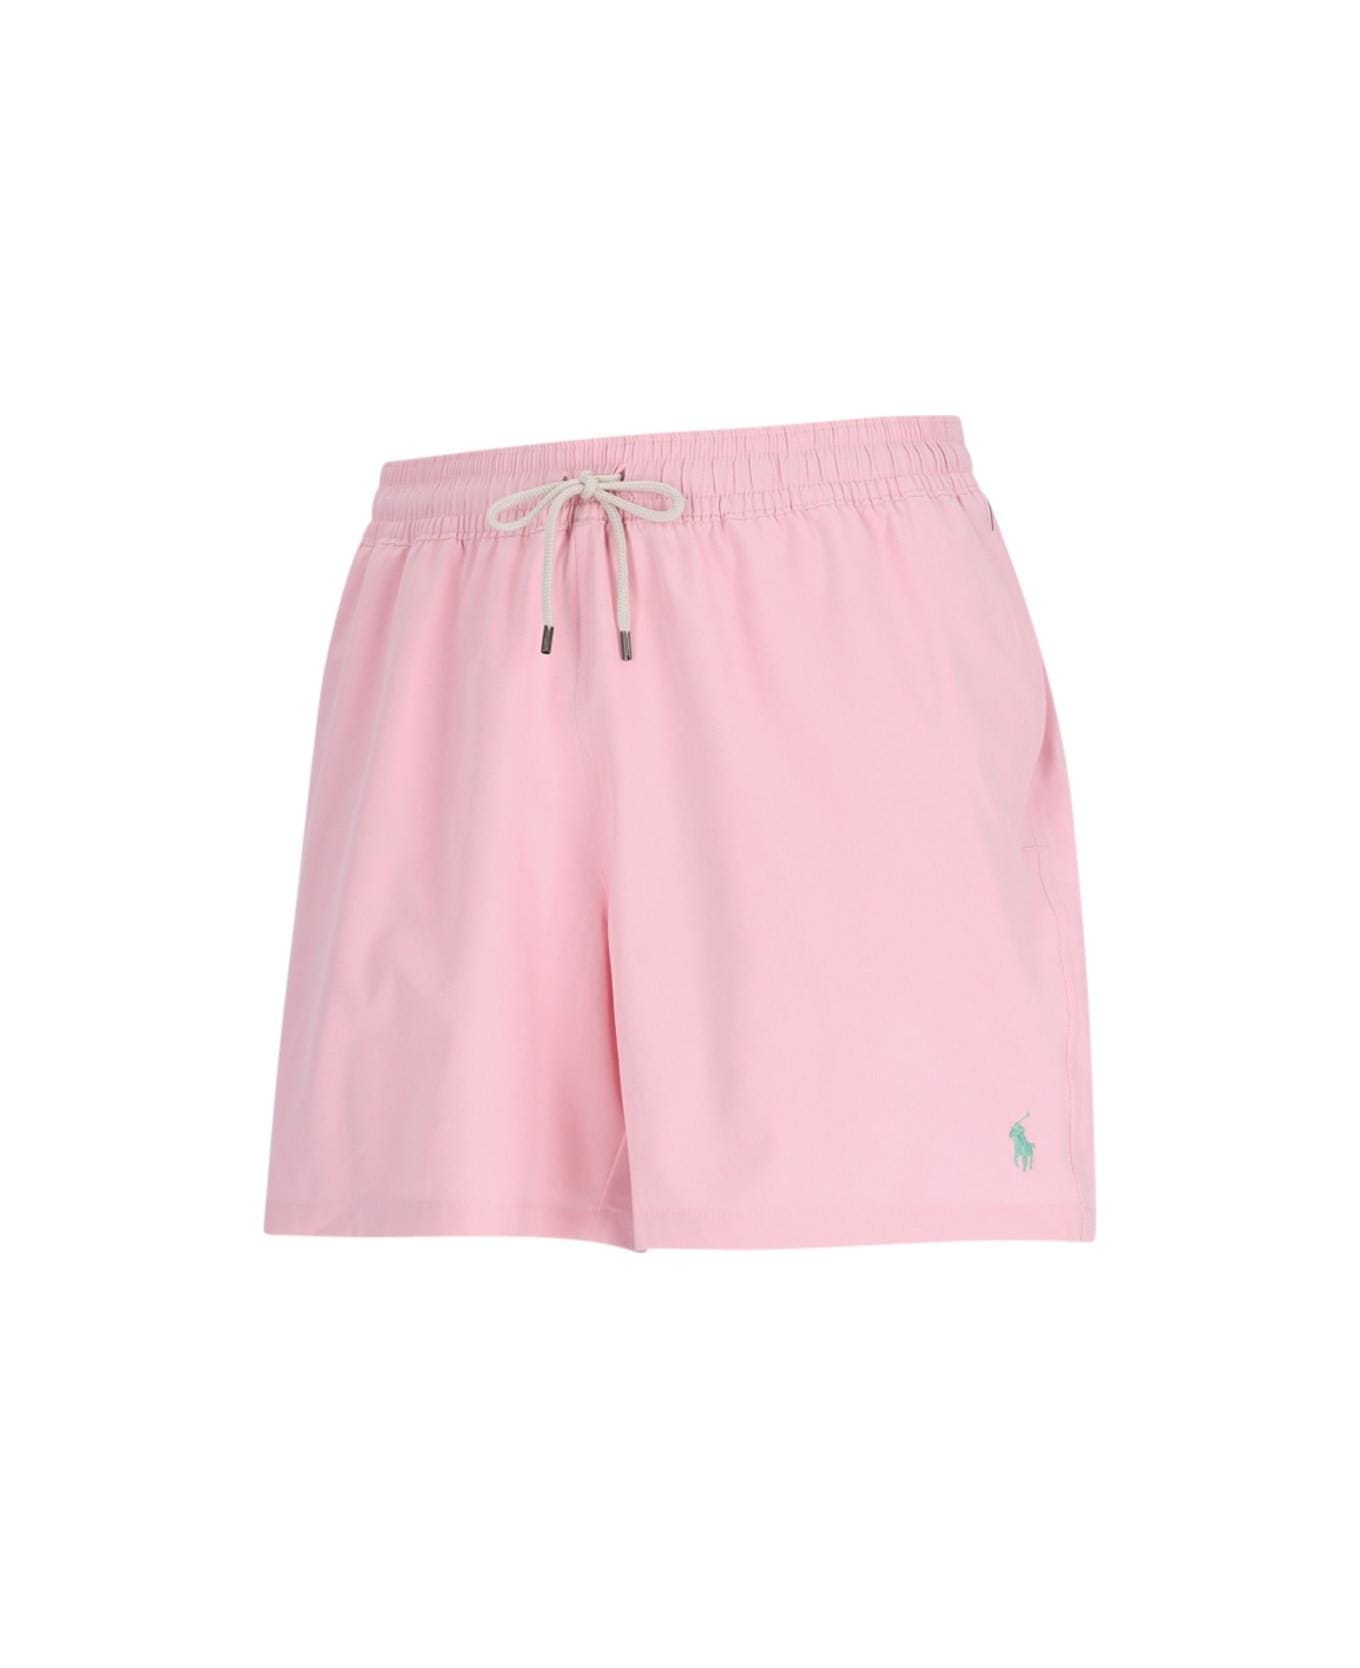 Polo Ralph Lauren 'traveler' Swim Shorts - Pink